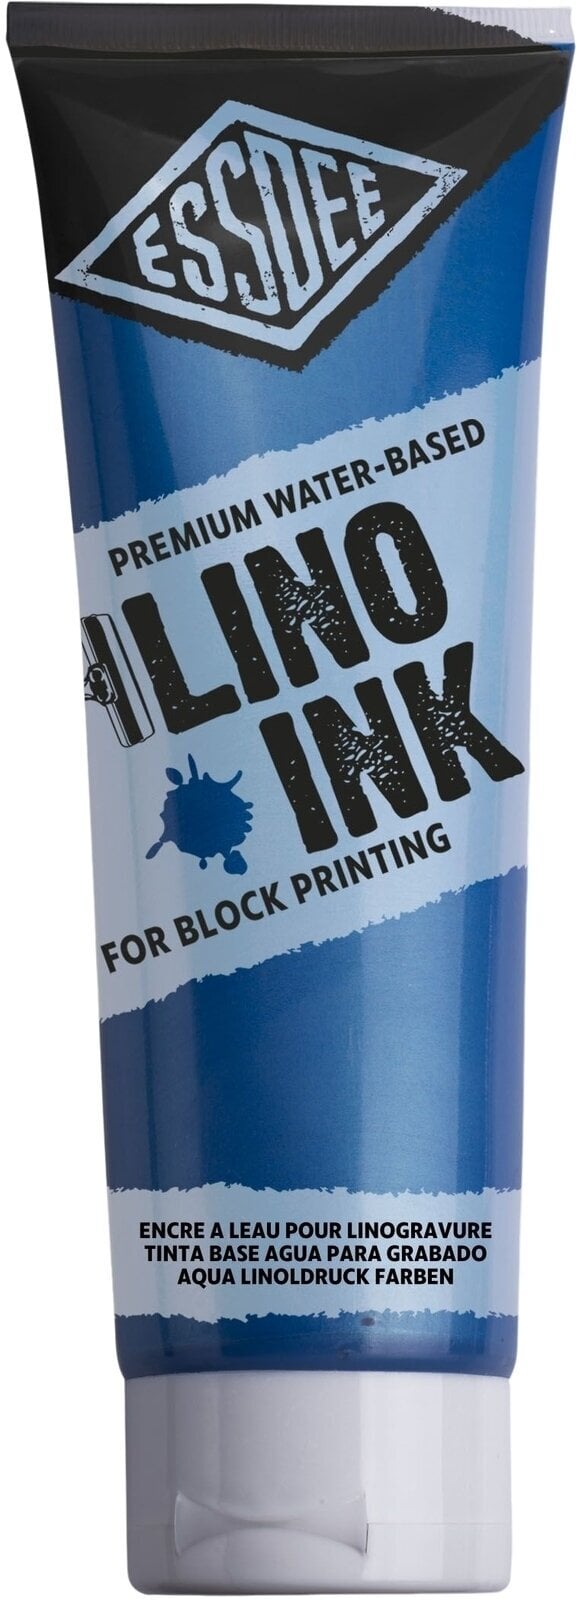 Vernice per linoleografia Essdee Block Printing Ink Vernice per linoleografia Pearlescent Blue 300 ml